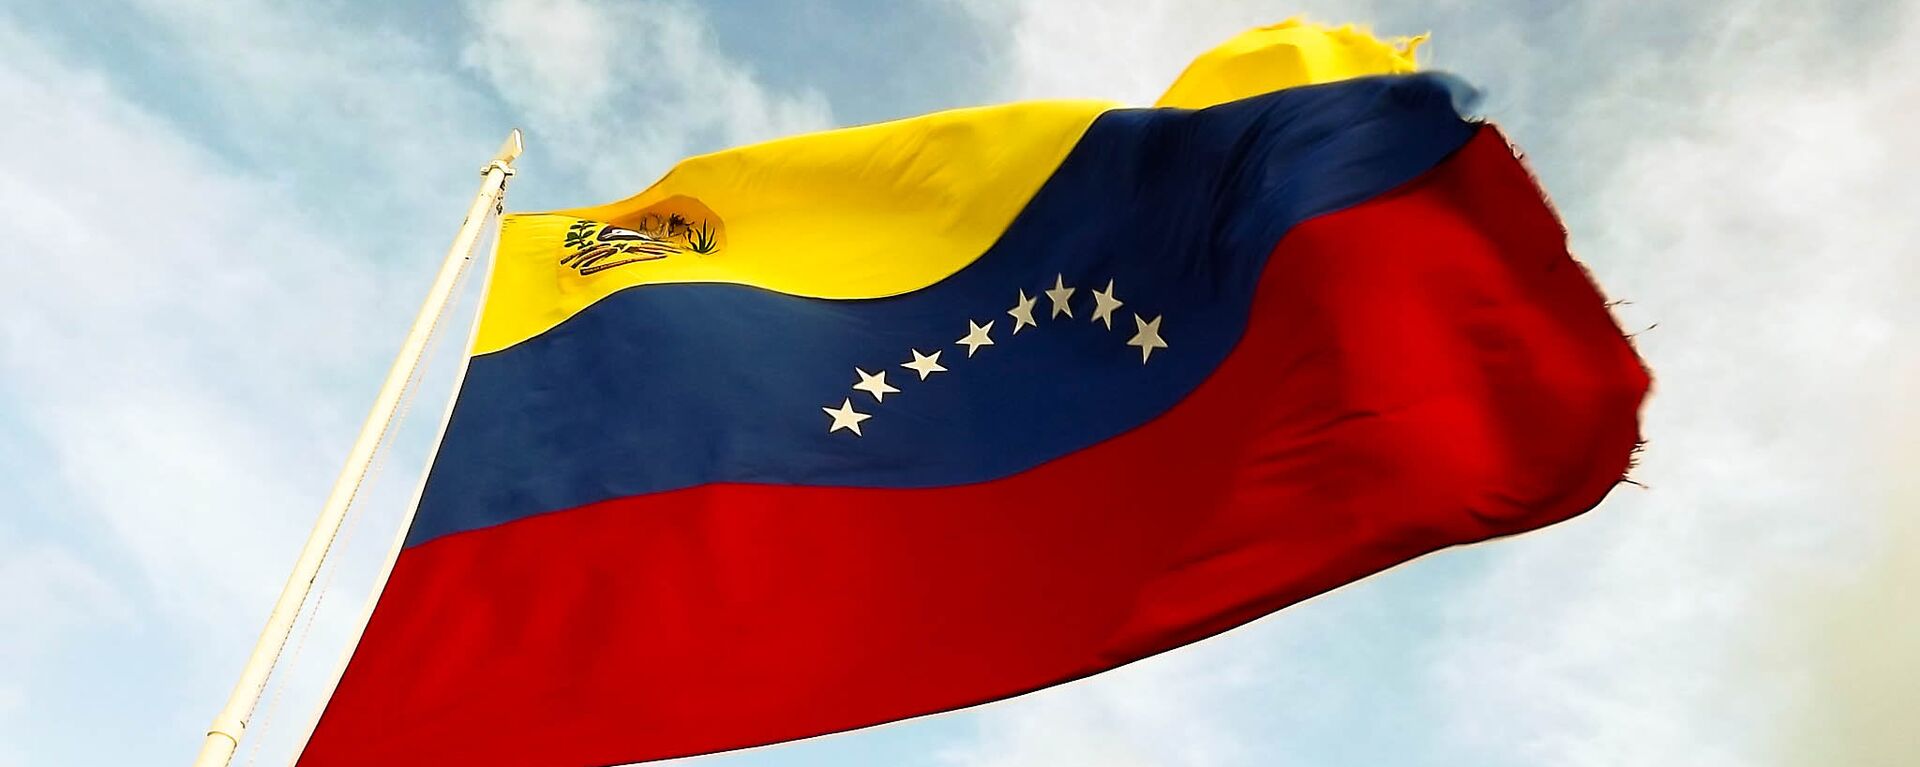 Bandera de Venezuela - Sputnik Mundo, 1920, 06.10.2020